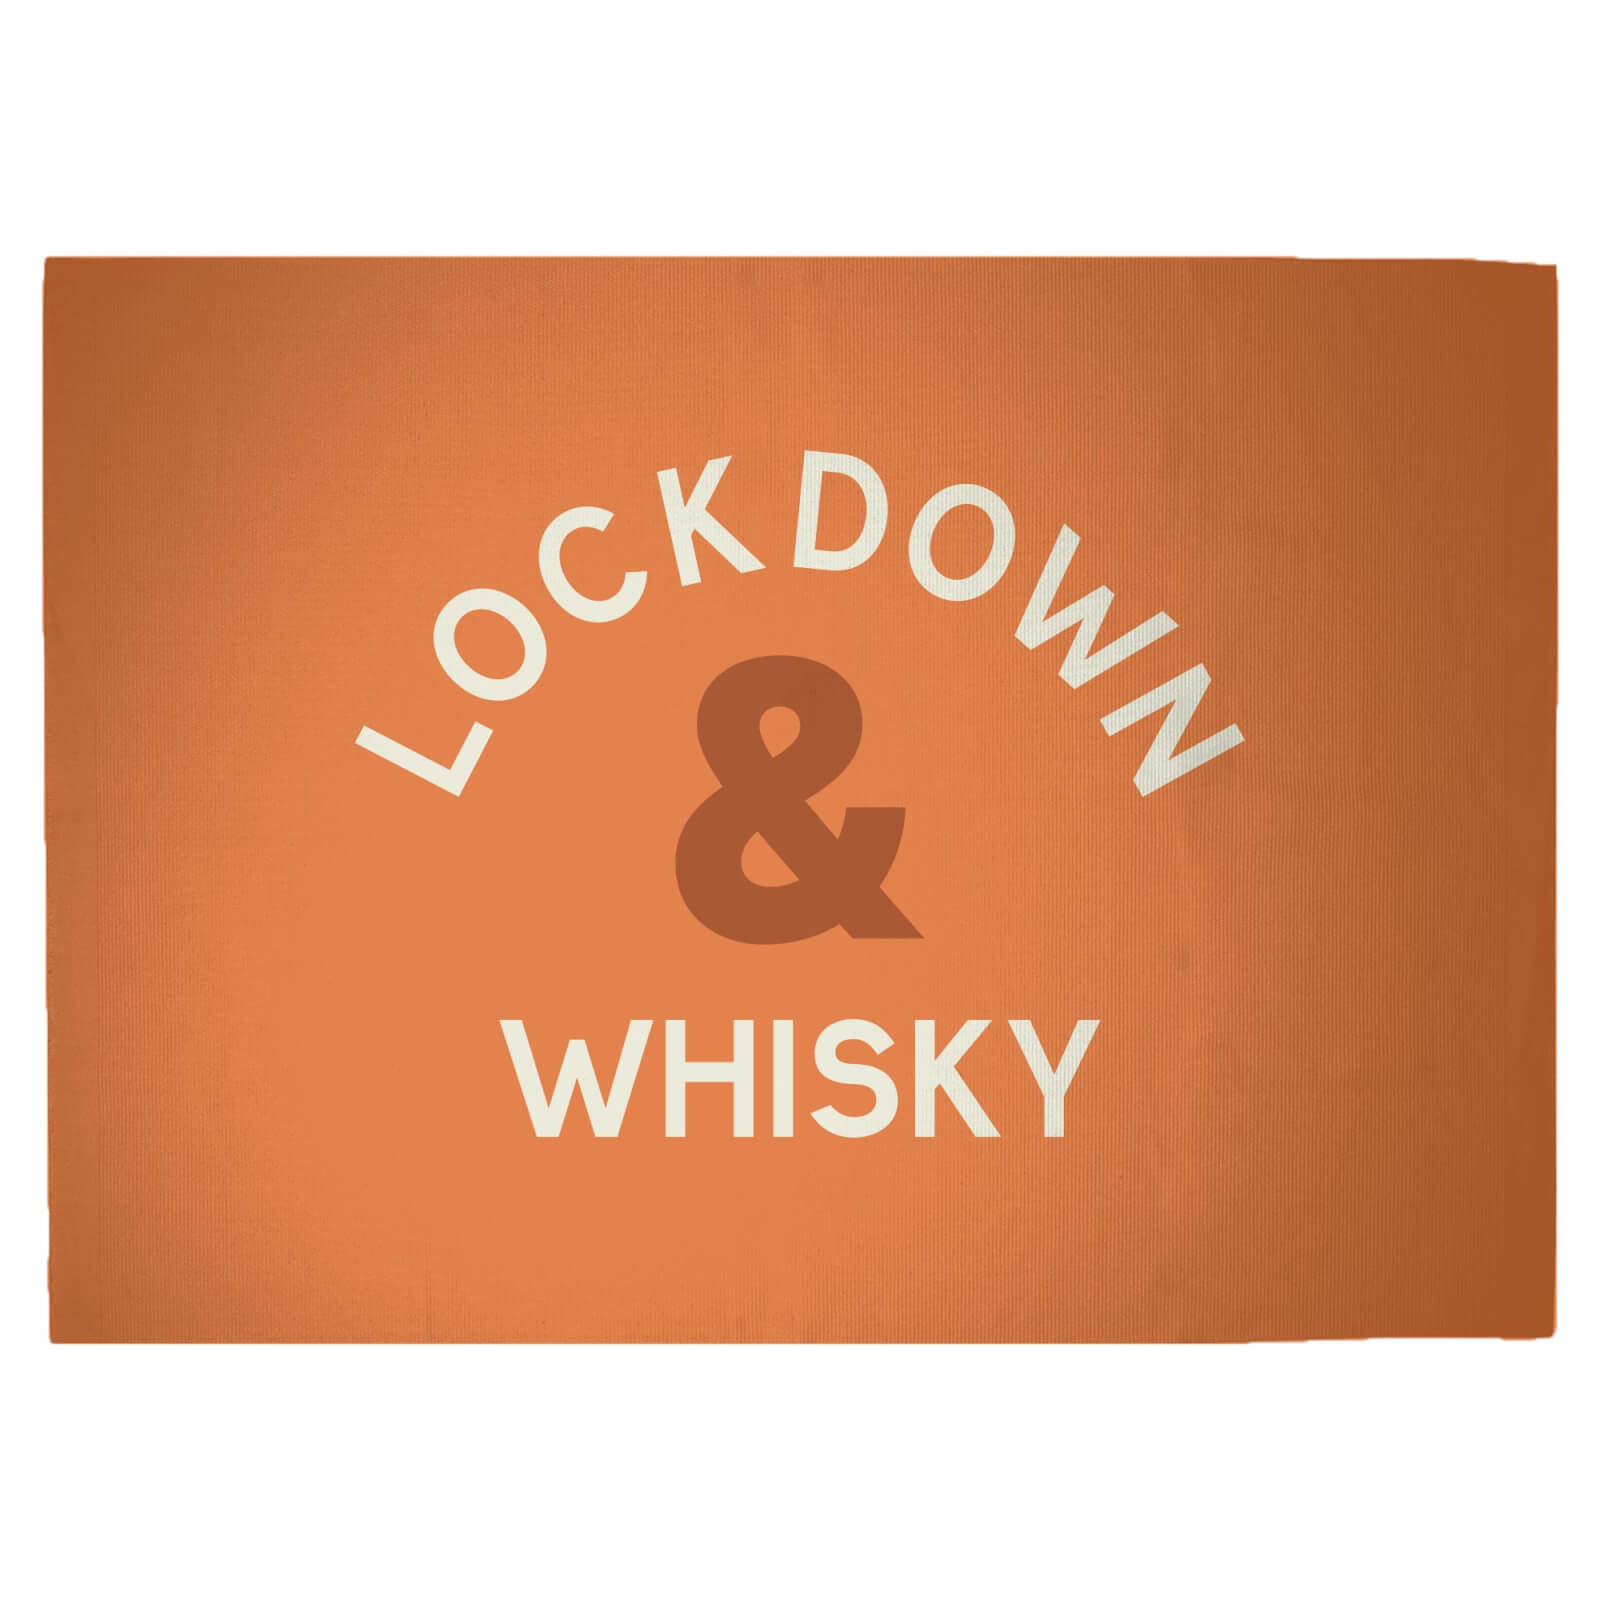 Lockdown & Whisky Woven Rug - Large